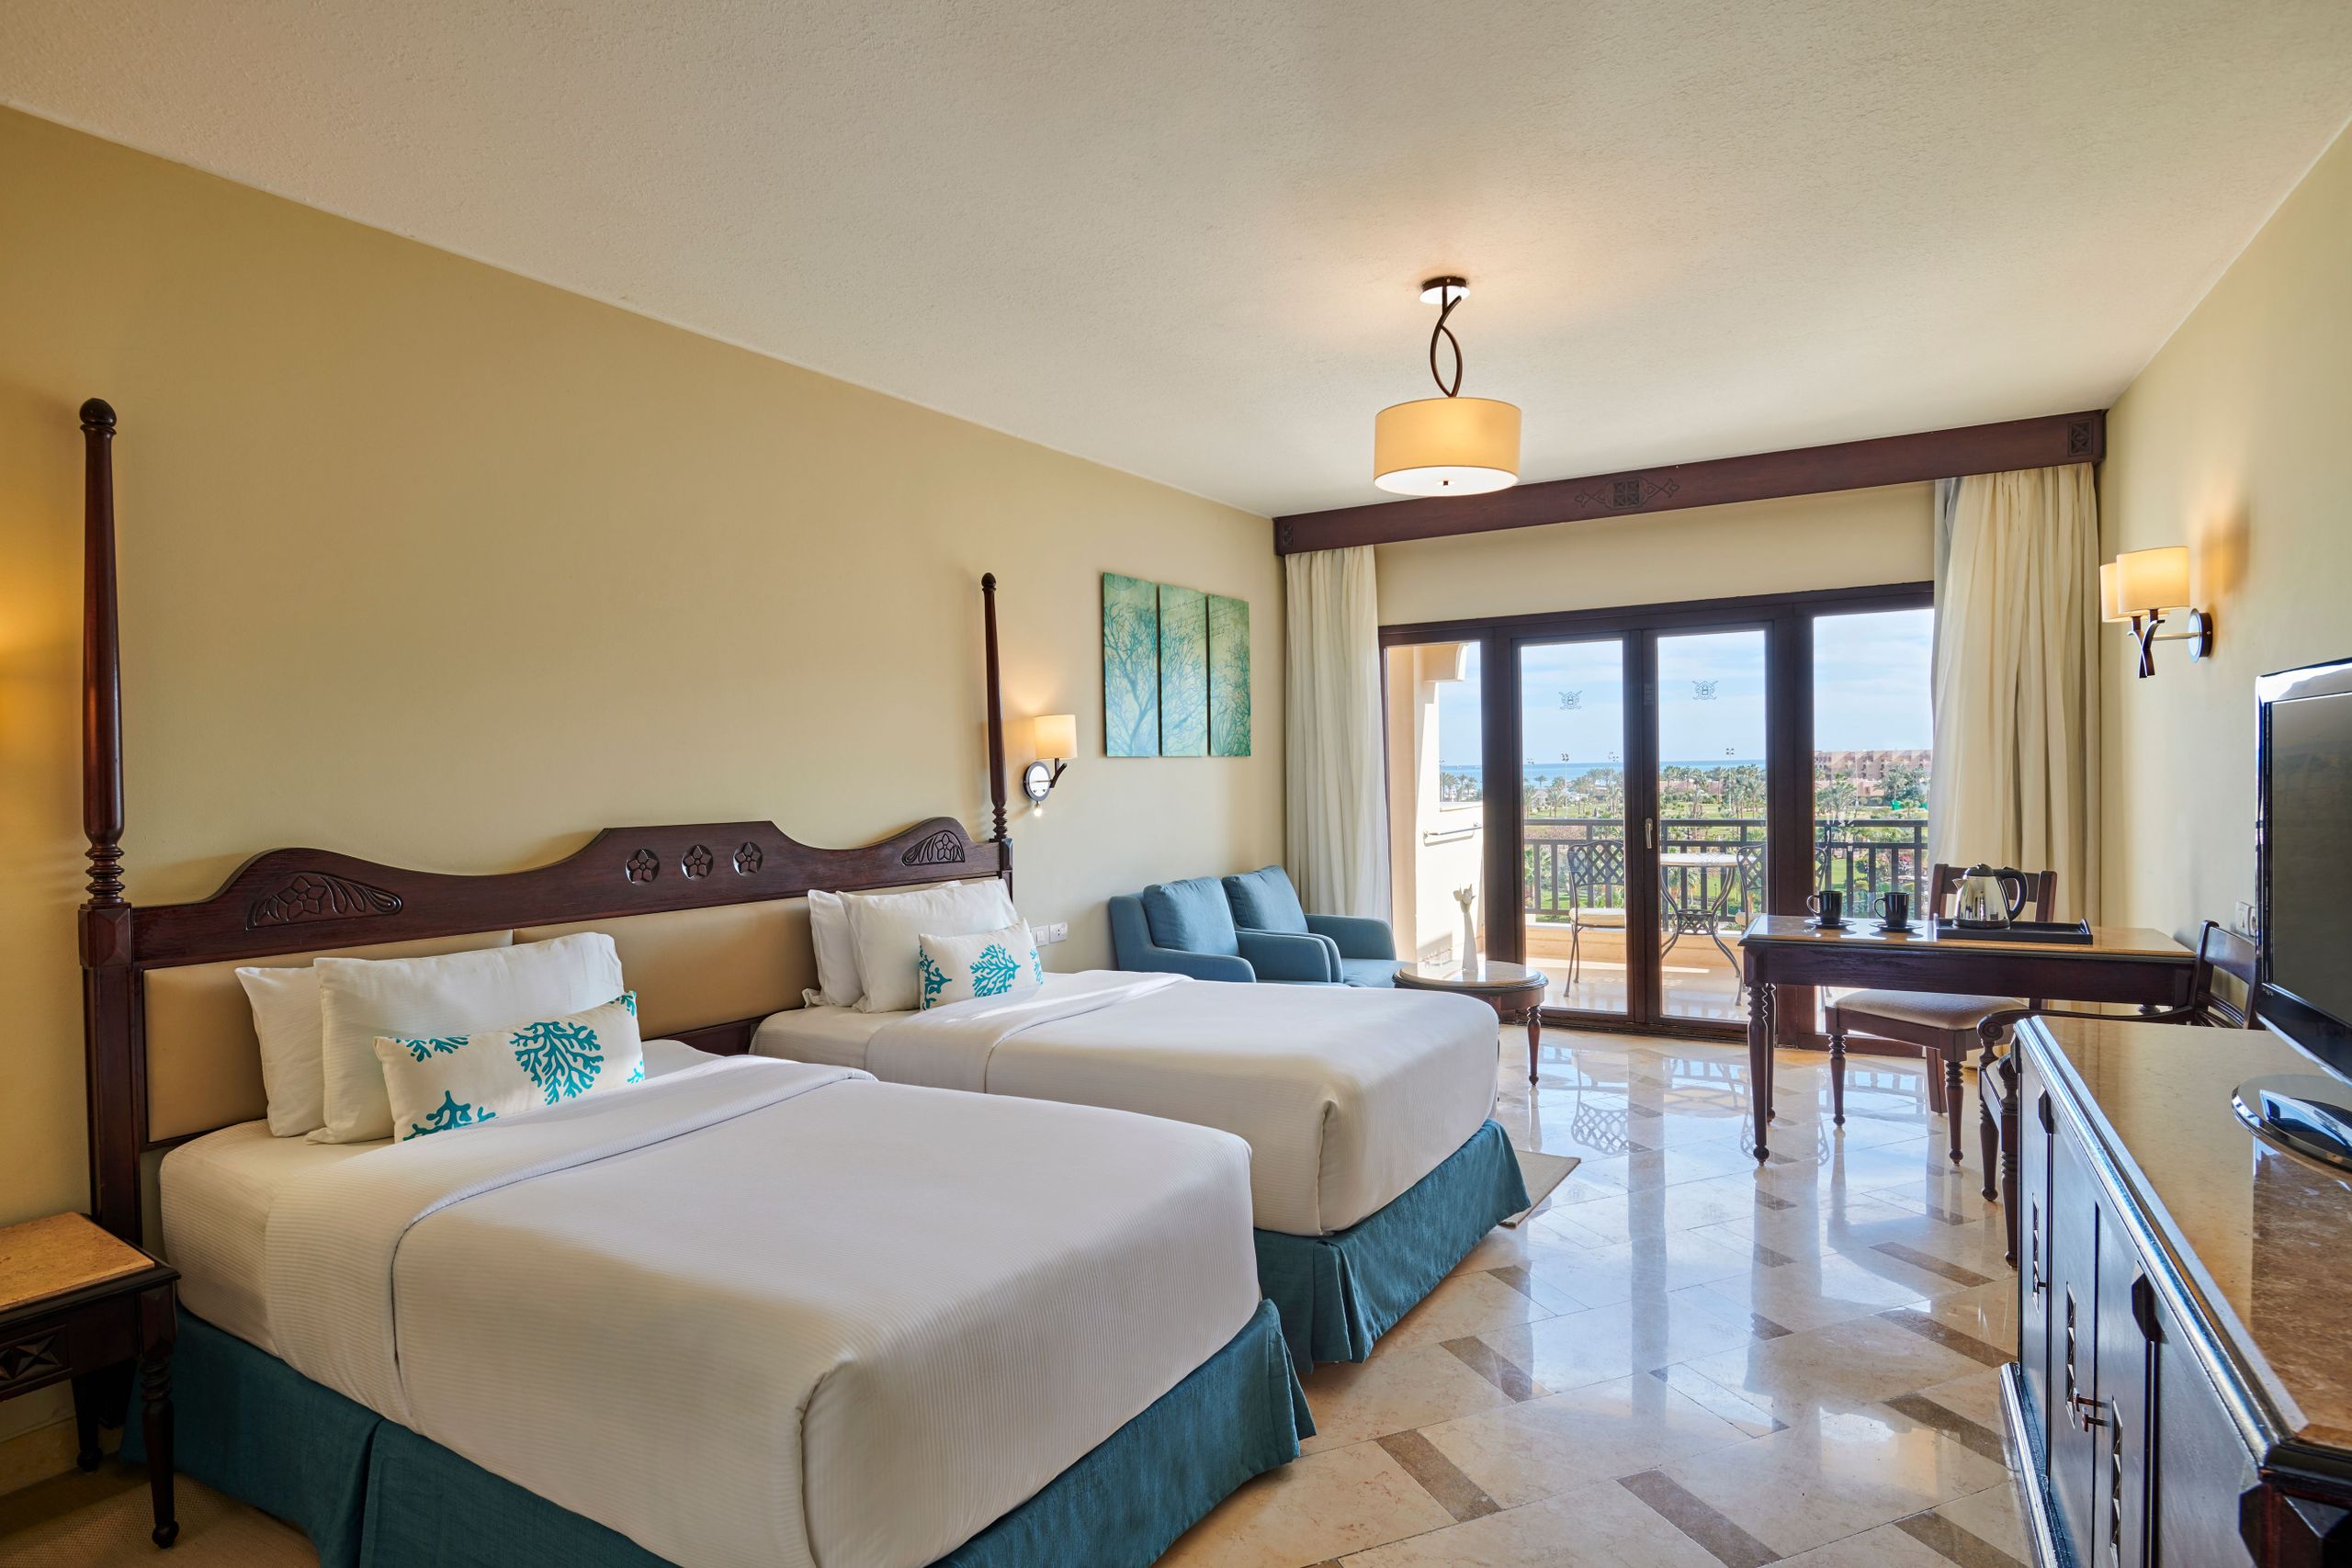 Steigenberger ALDAU Beach Hotel, Hurghada/Egypt - Elite Room